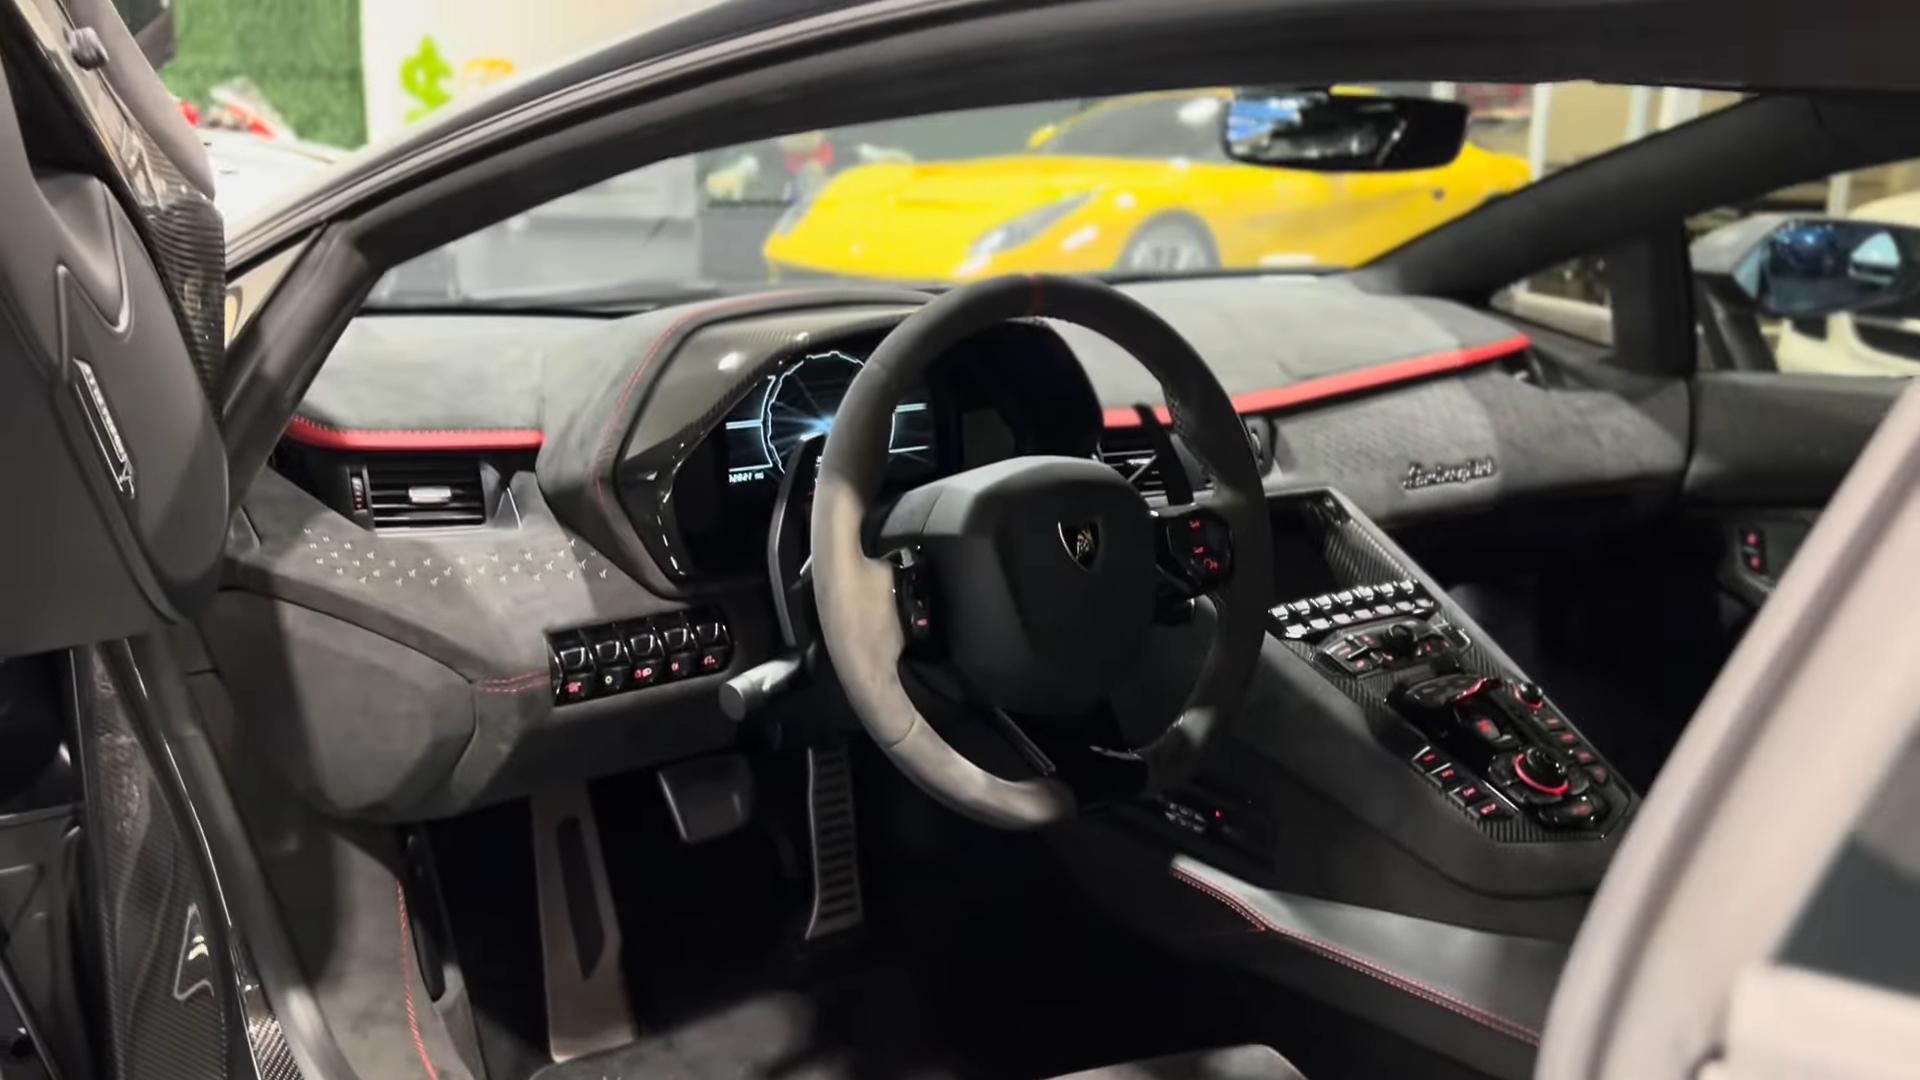 Lamborghini aventador ultimae interior pictured here